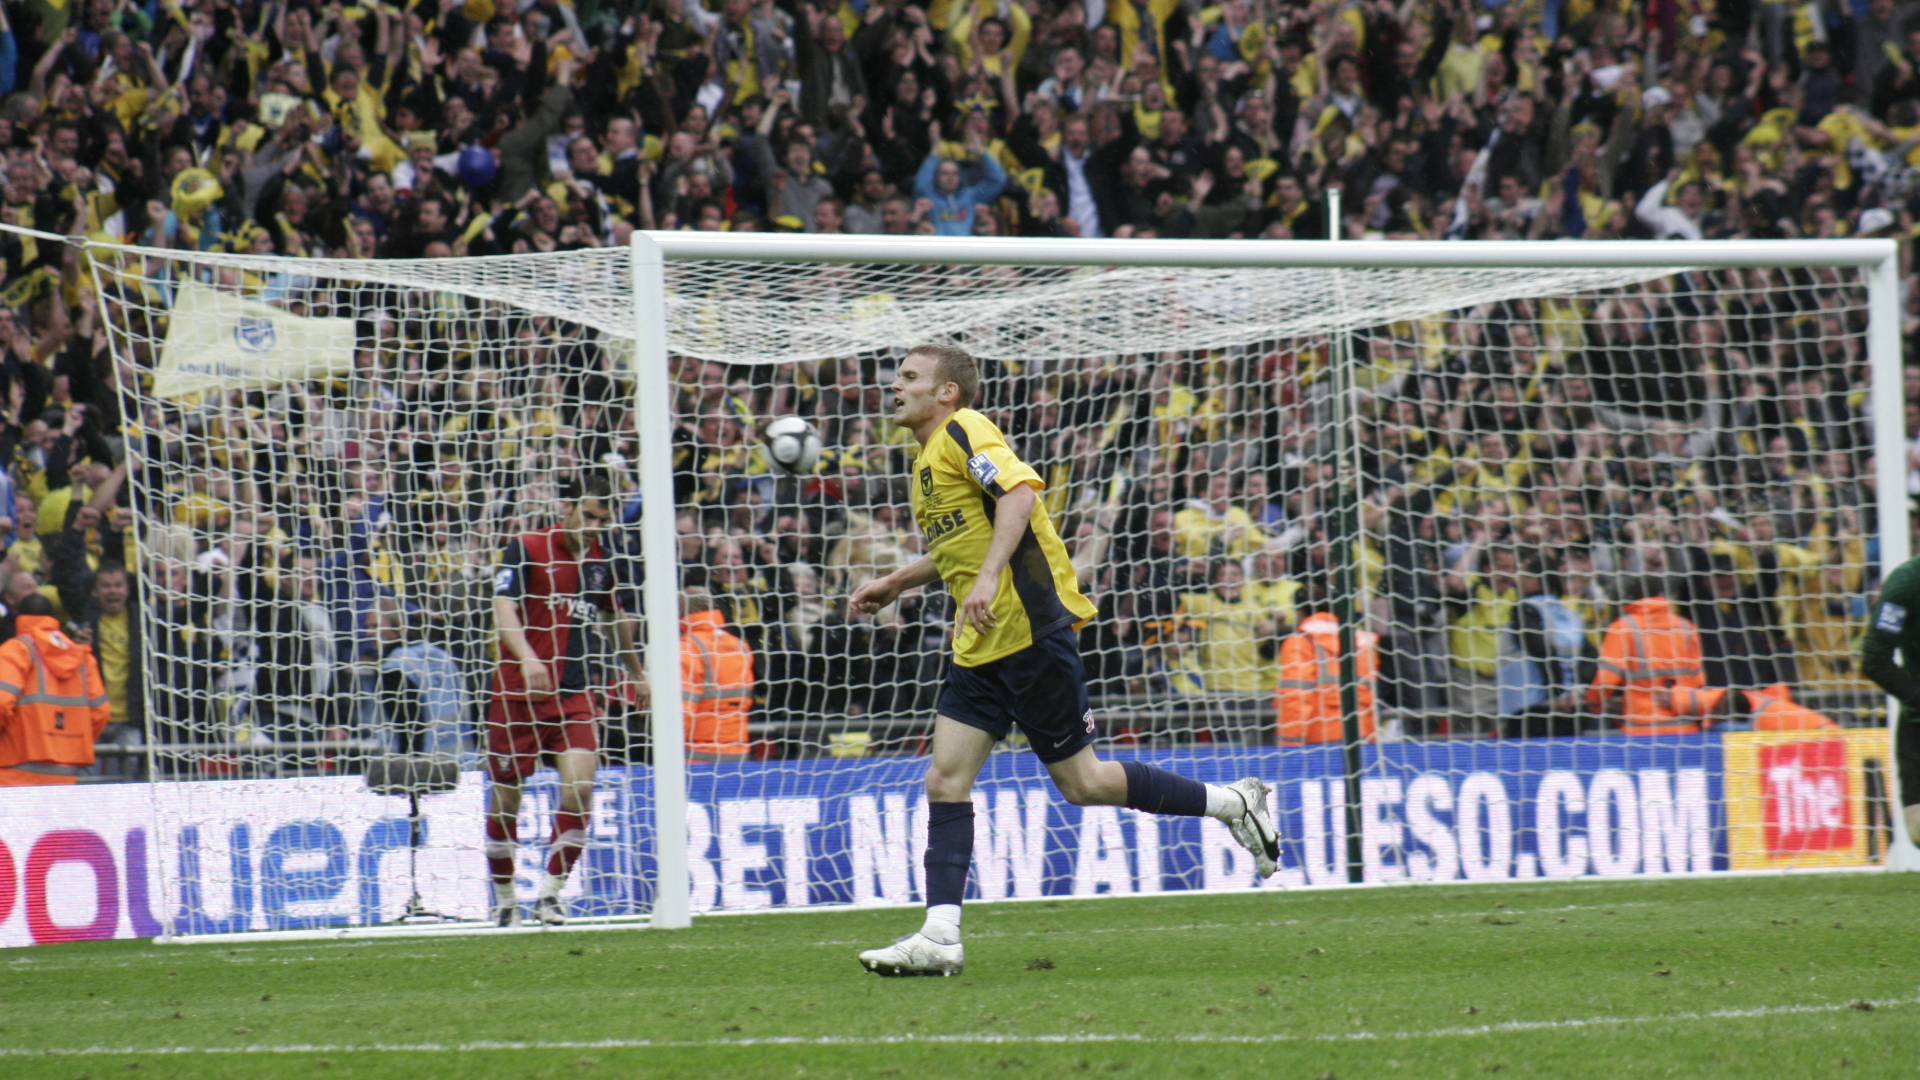 Alfie Potter scoring at Wembley in 2010